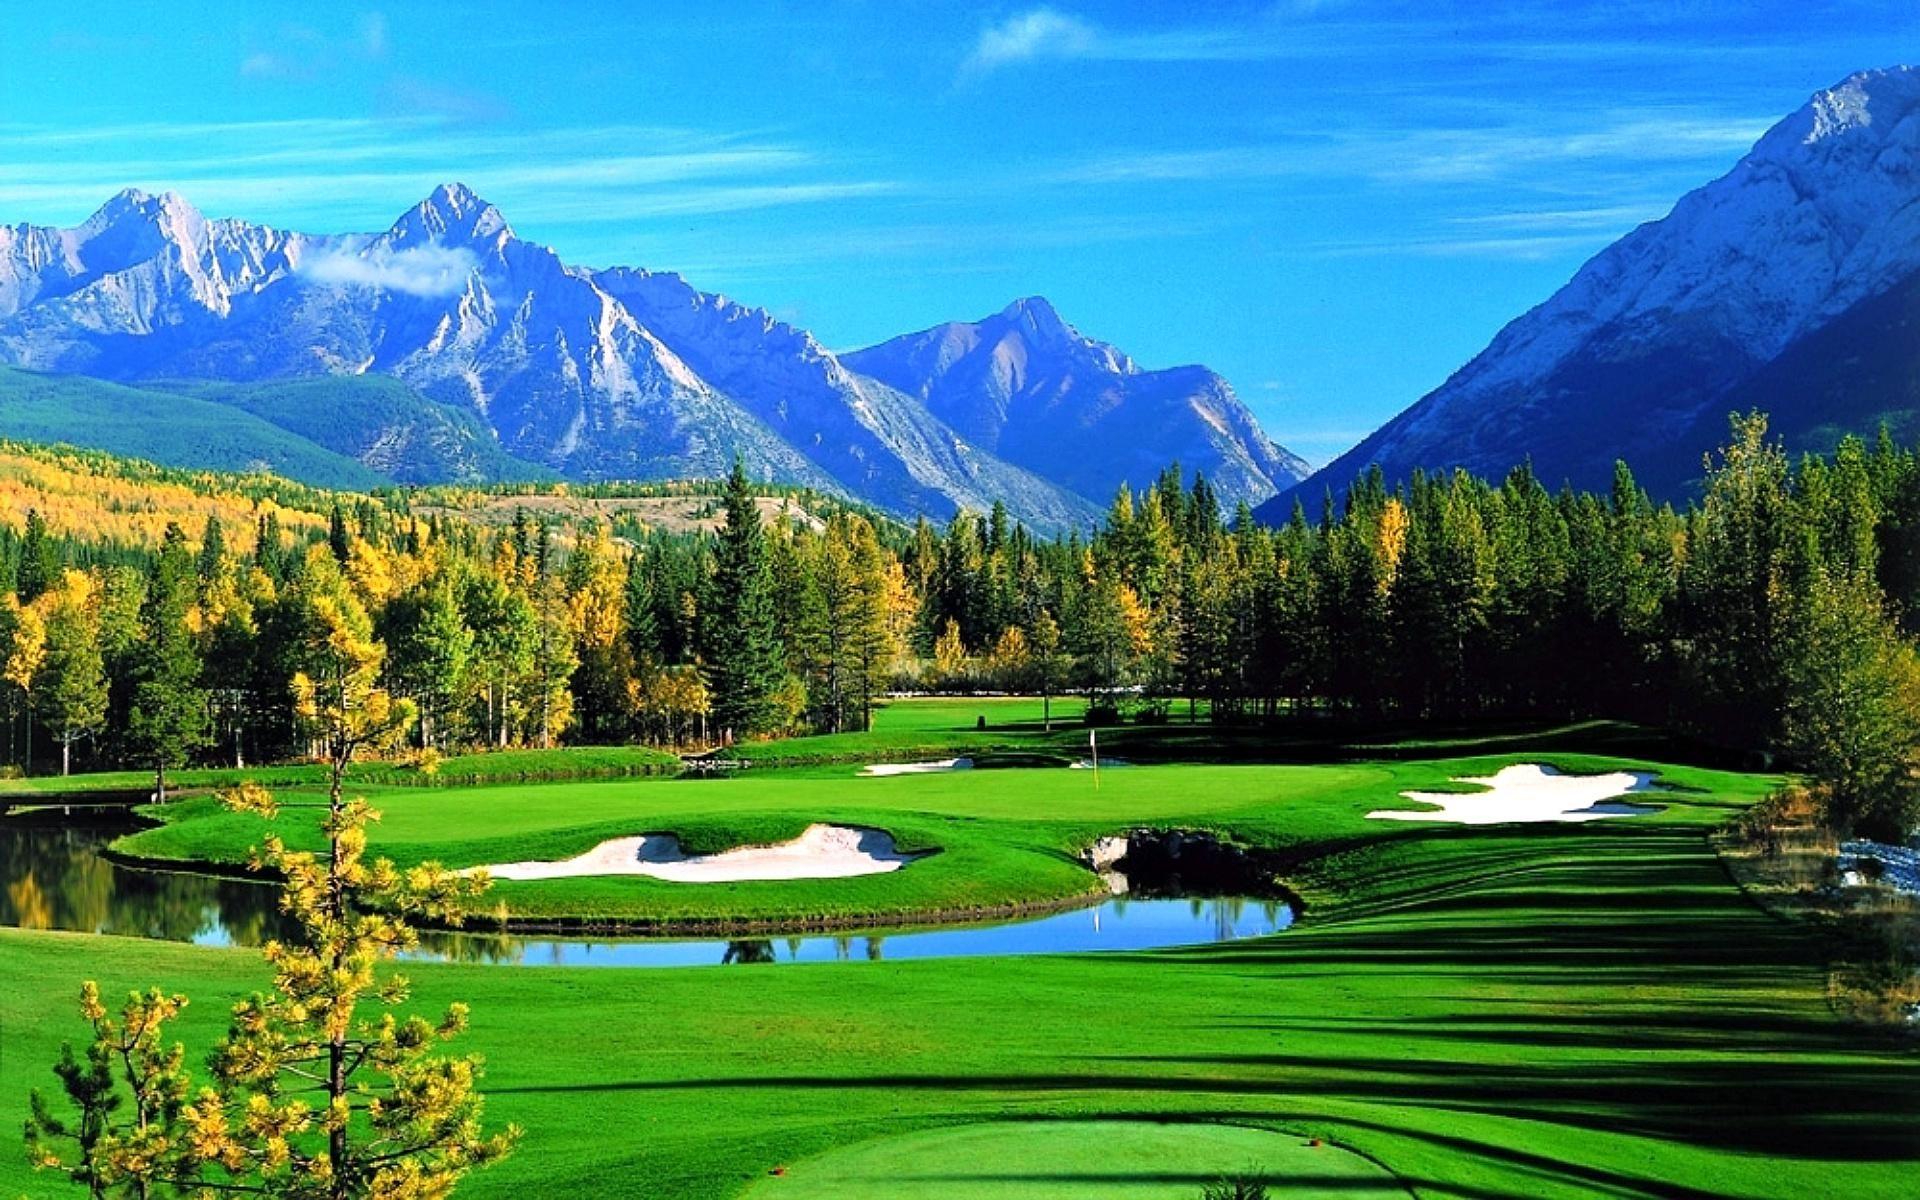 Nature & Landscape Golf Course wallpaper Desktop, Phone, Tablet